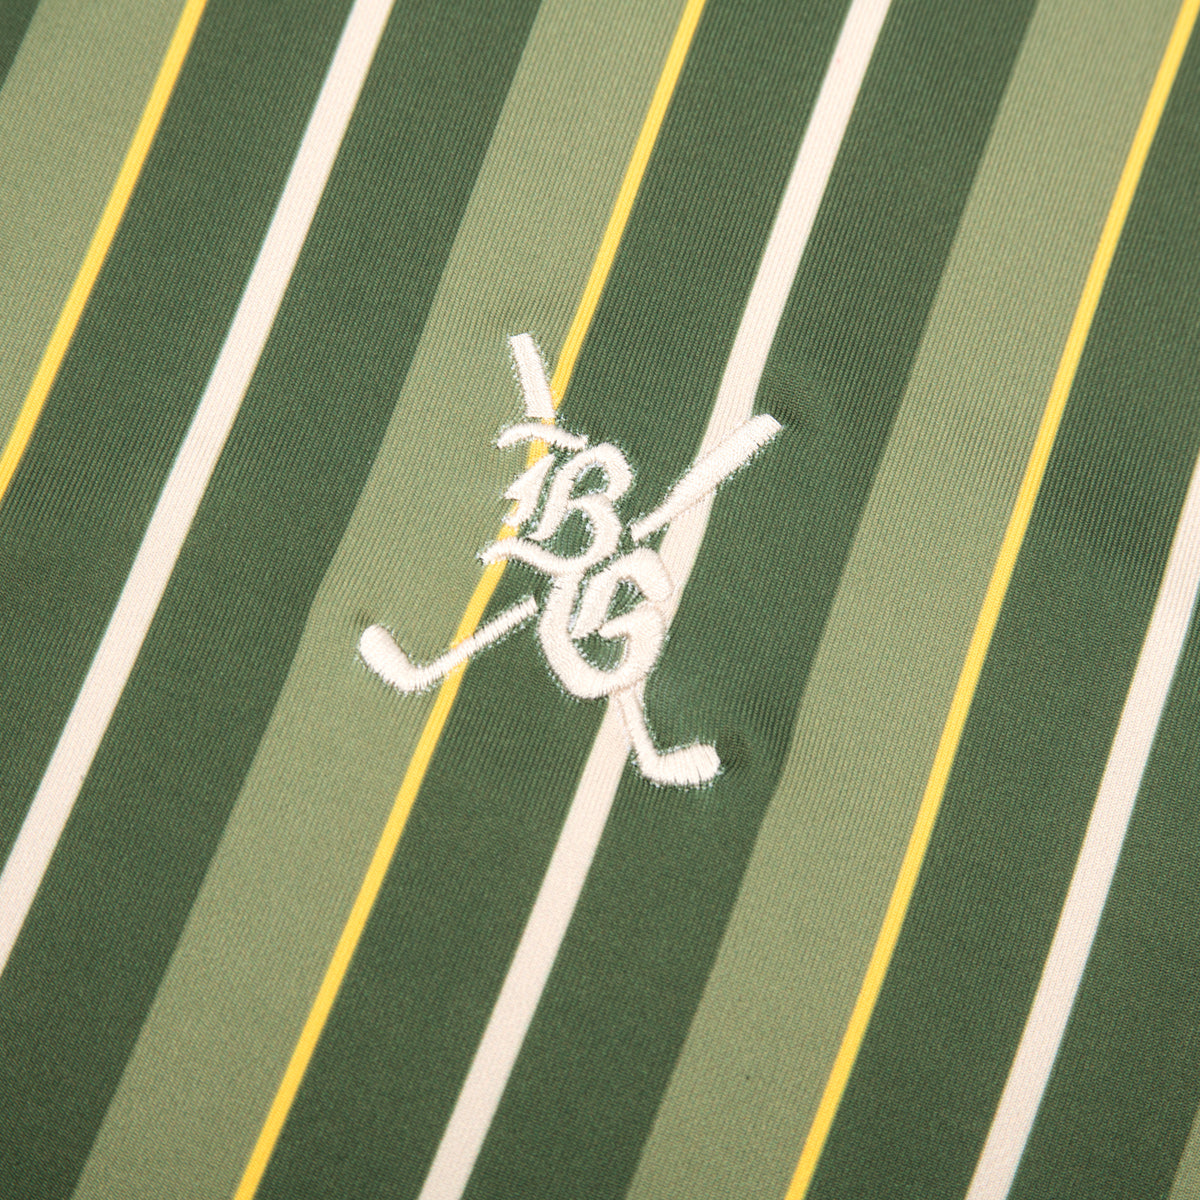 Barstool Golf Vintage Logo Striped Polo-Polos-Fore Play-Barstool Sports